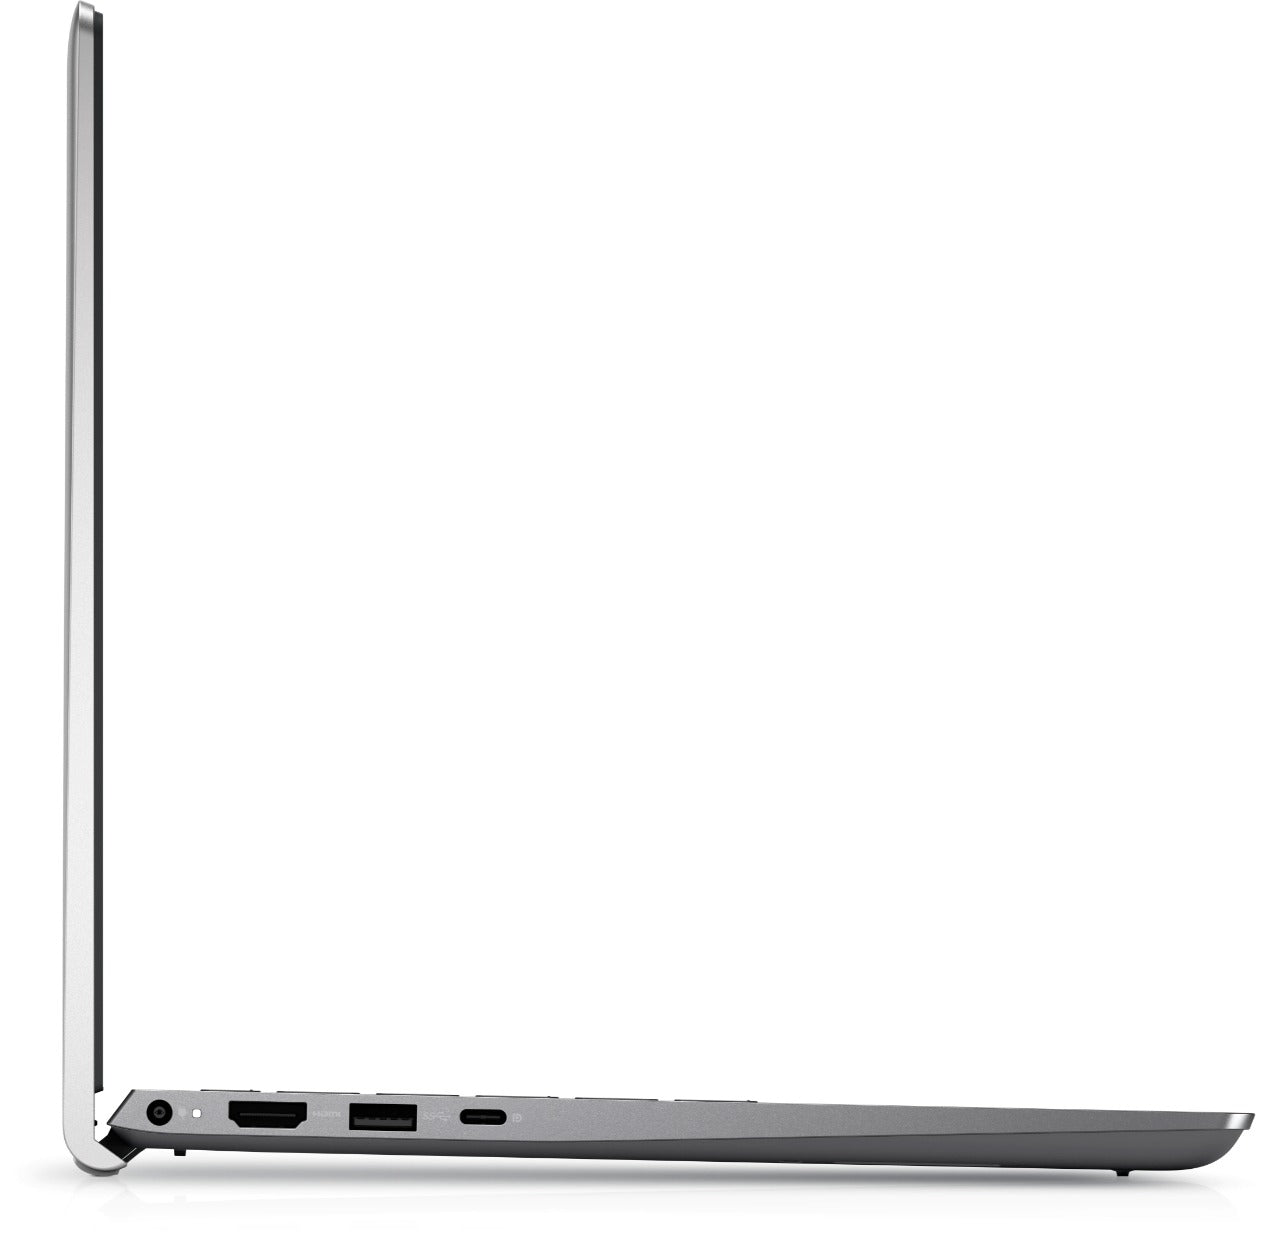 Dell Laptop Inspiron 3501, Intel Core i5, NVIDIA GeForce MX330 2GB GDDR5, 11th Gen